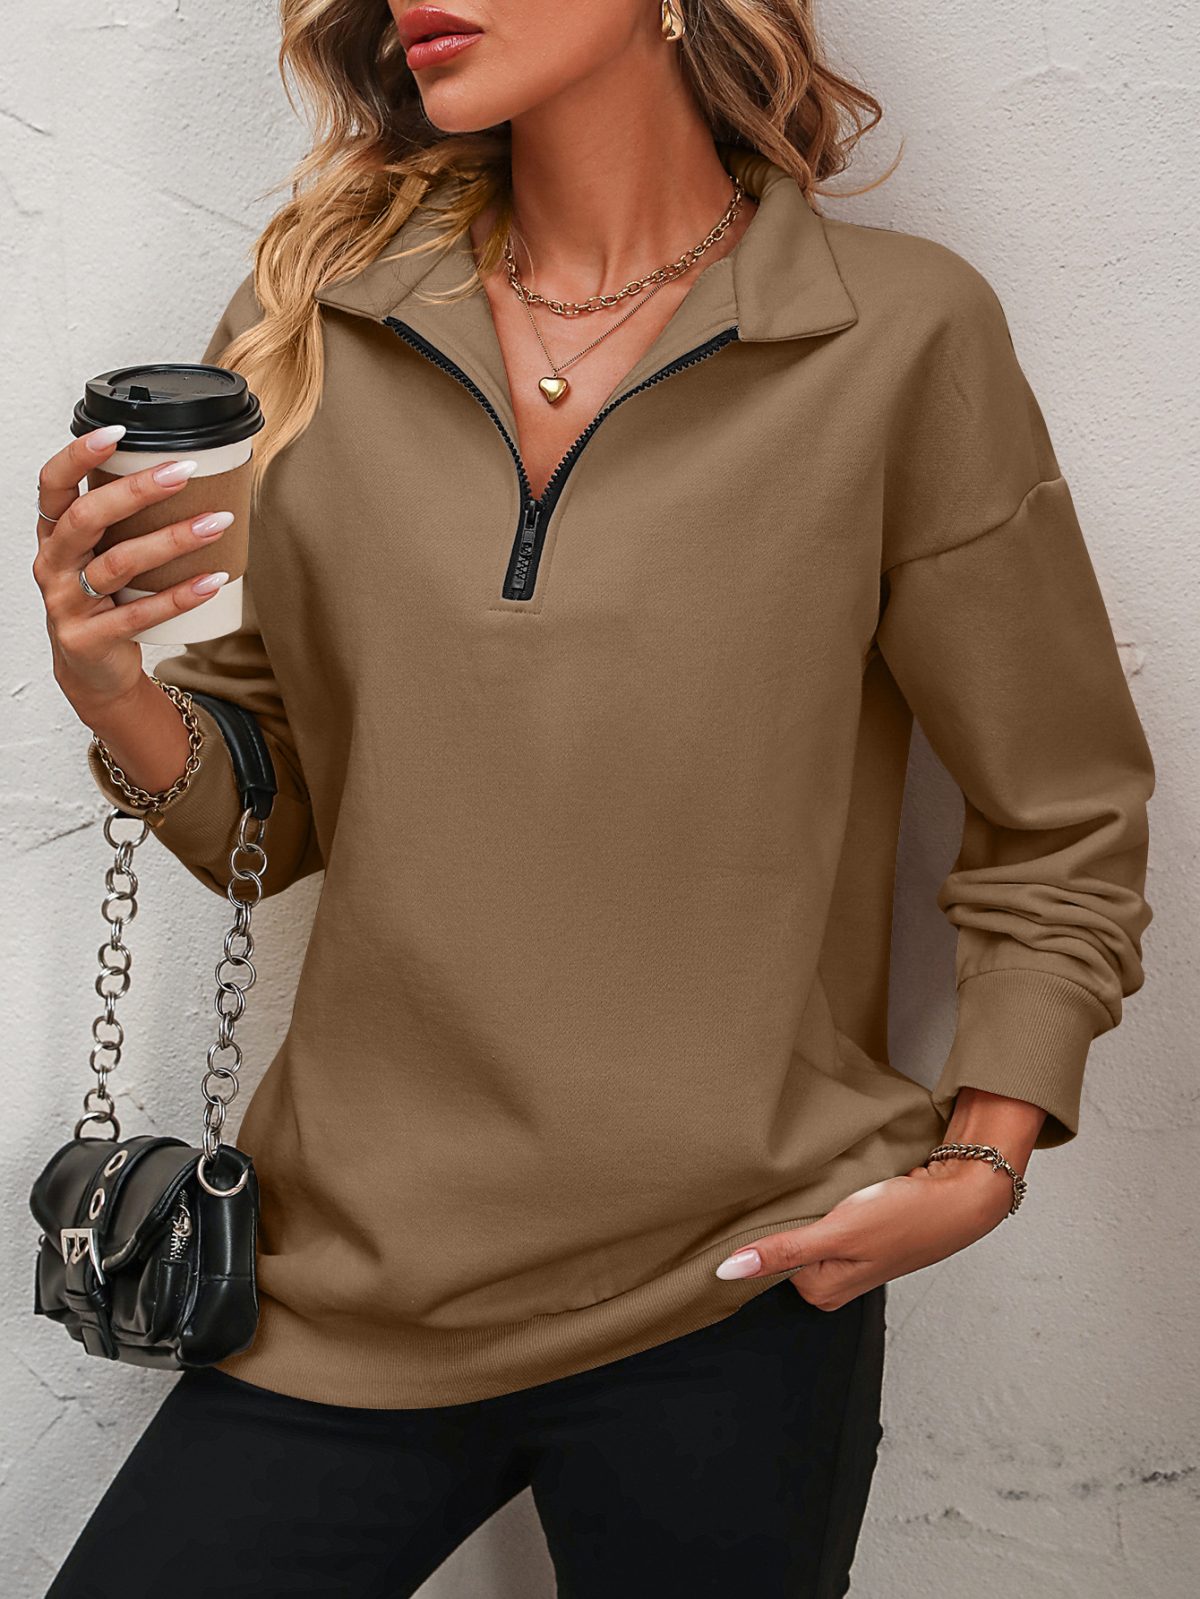 Half Long Sleeve Zipper Fleece Sweatshirt in Hoodies & Sweatshirts